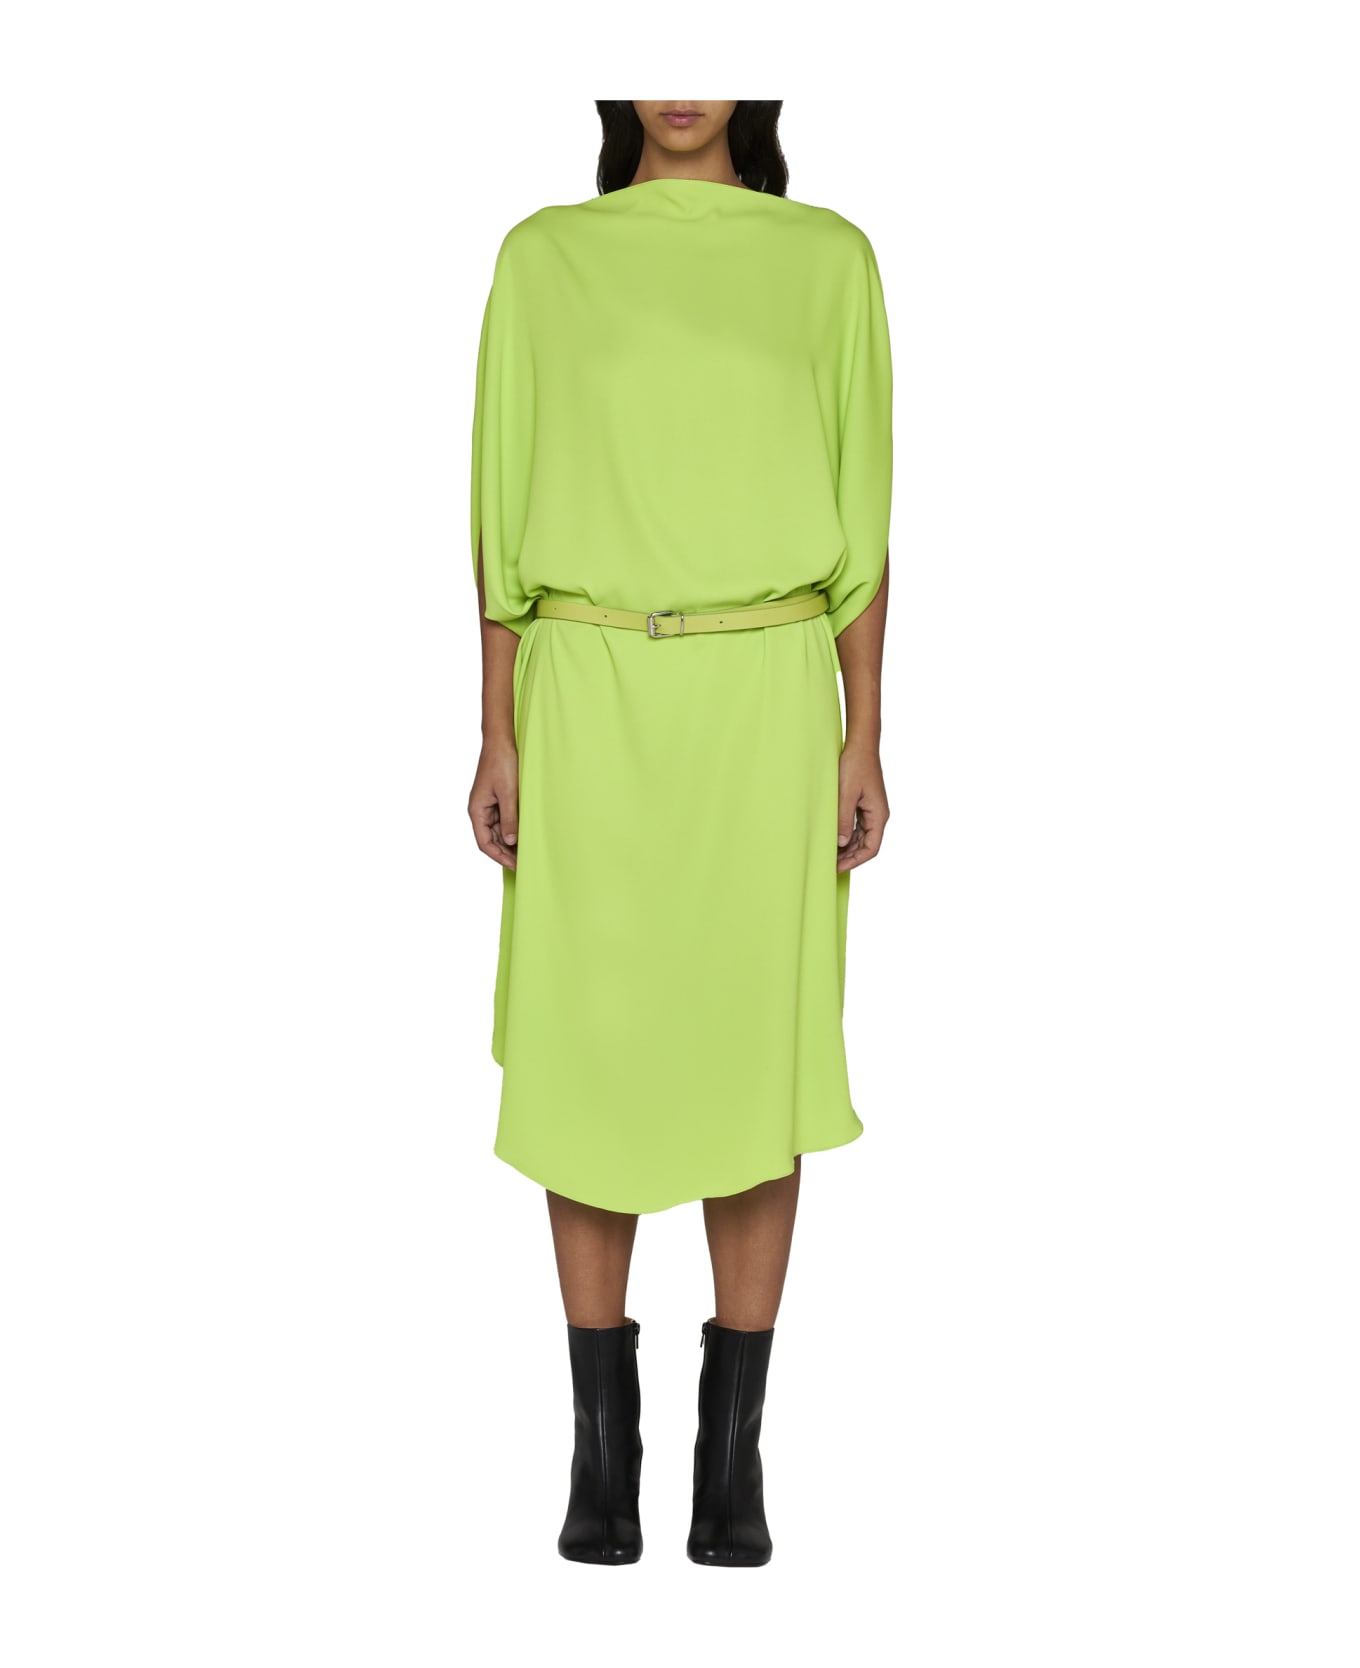 MM6 Maison Margiela Dress - Neon green